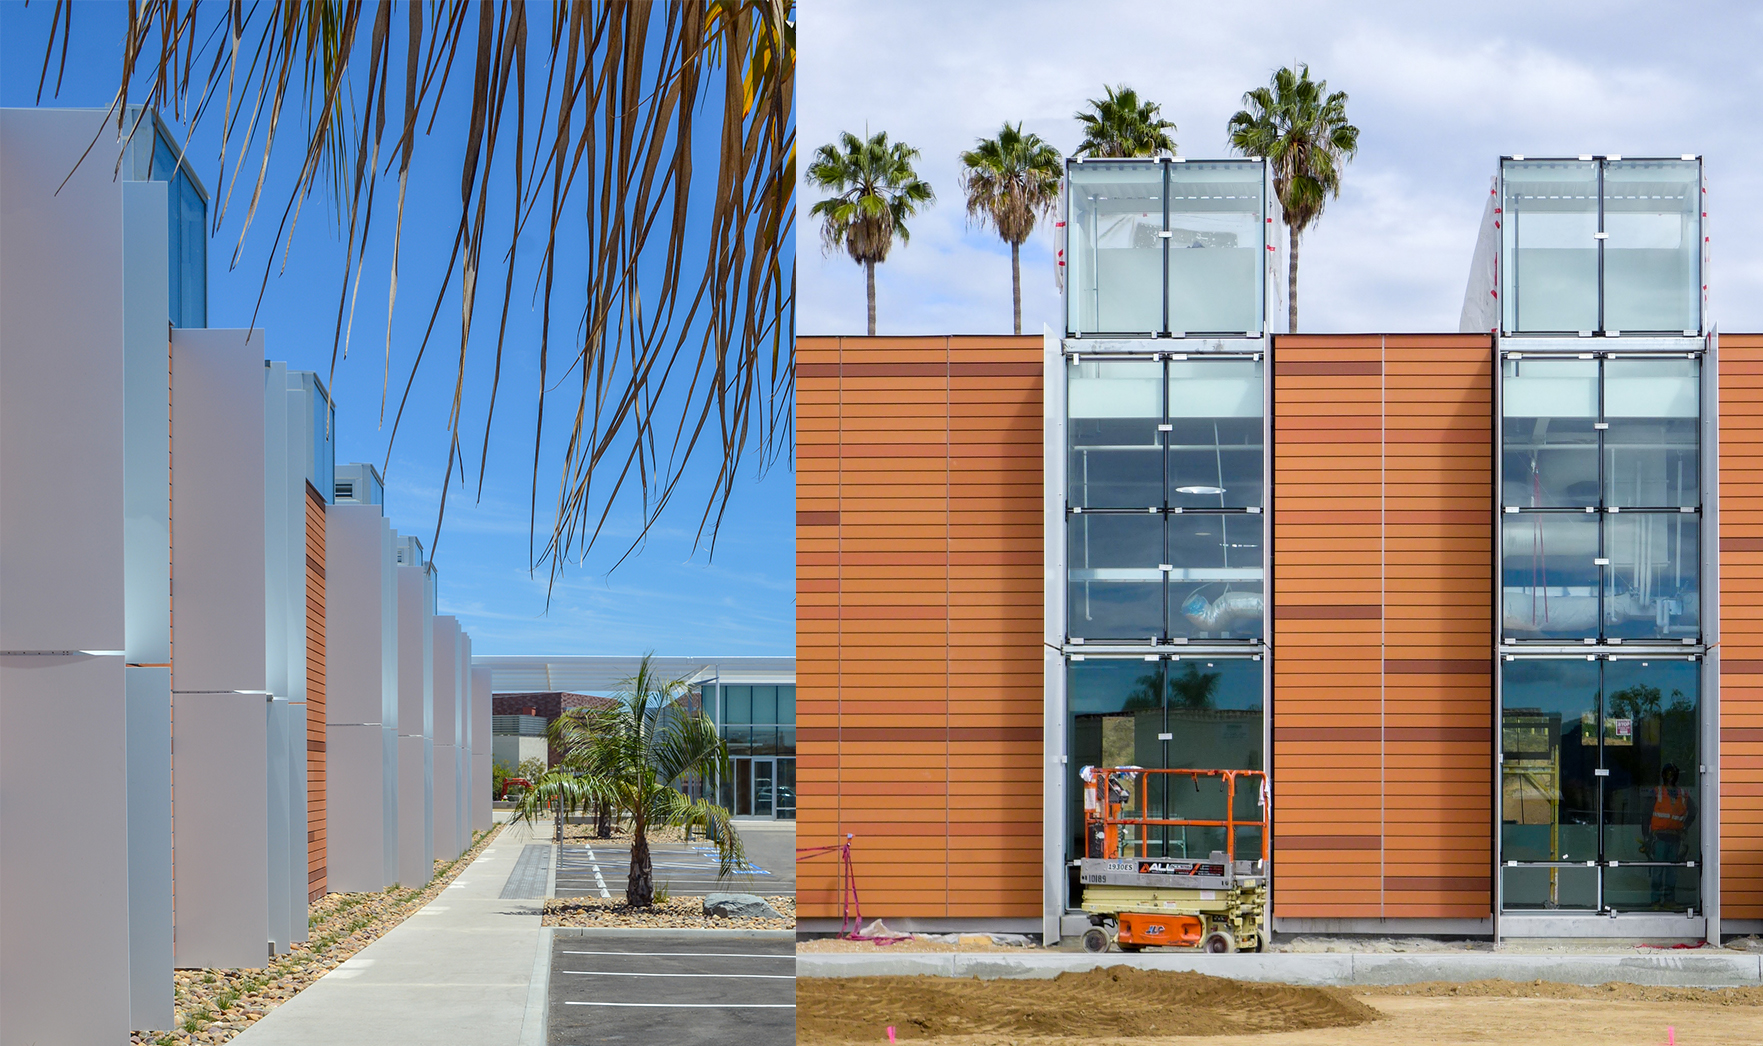 Palomar Community College Wins Two California Design Awards